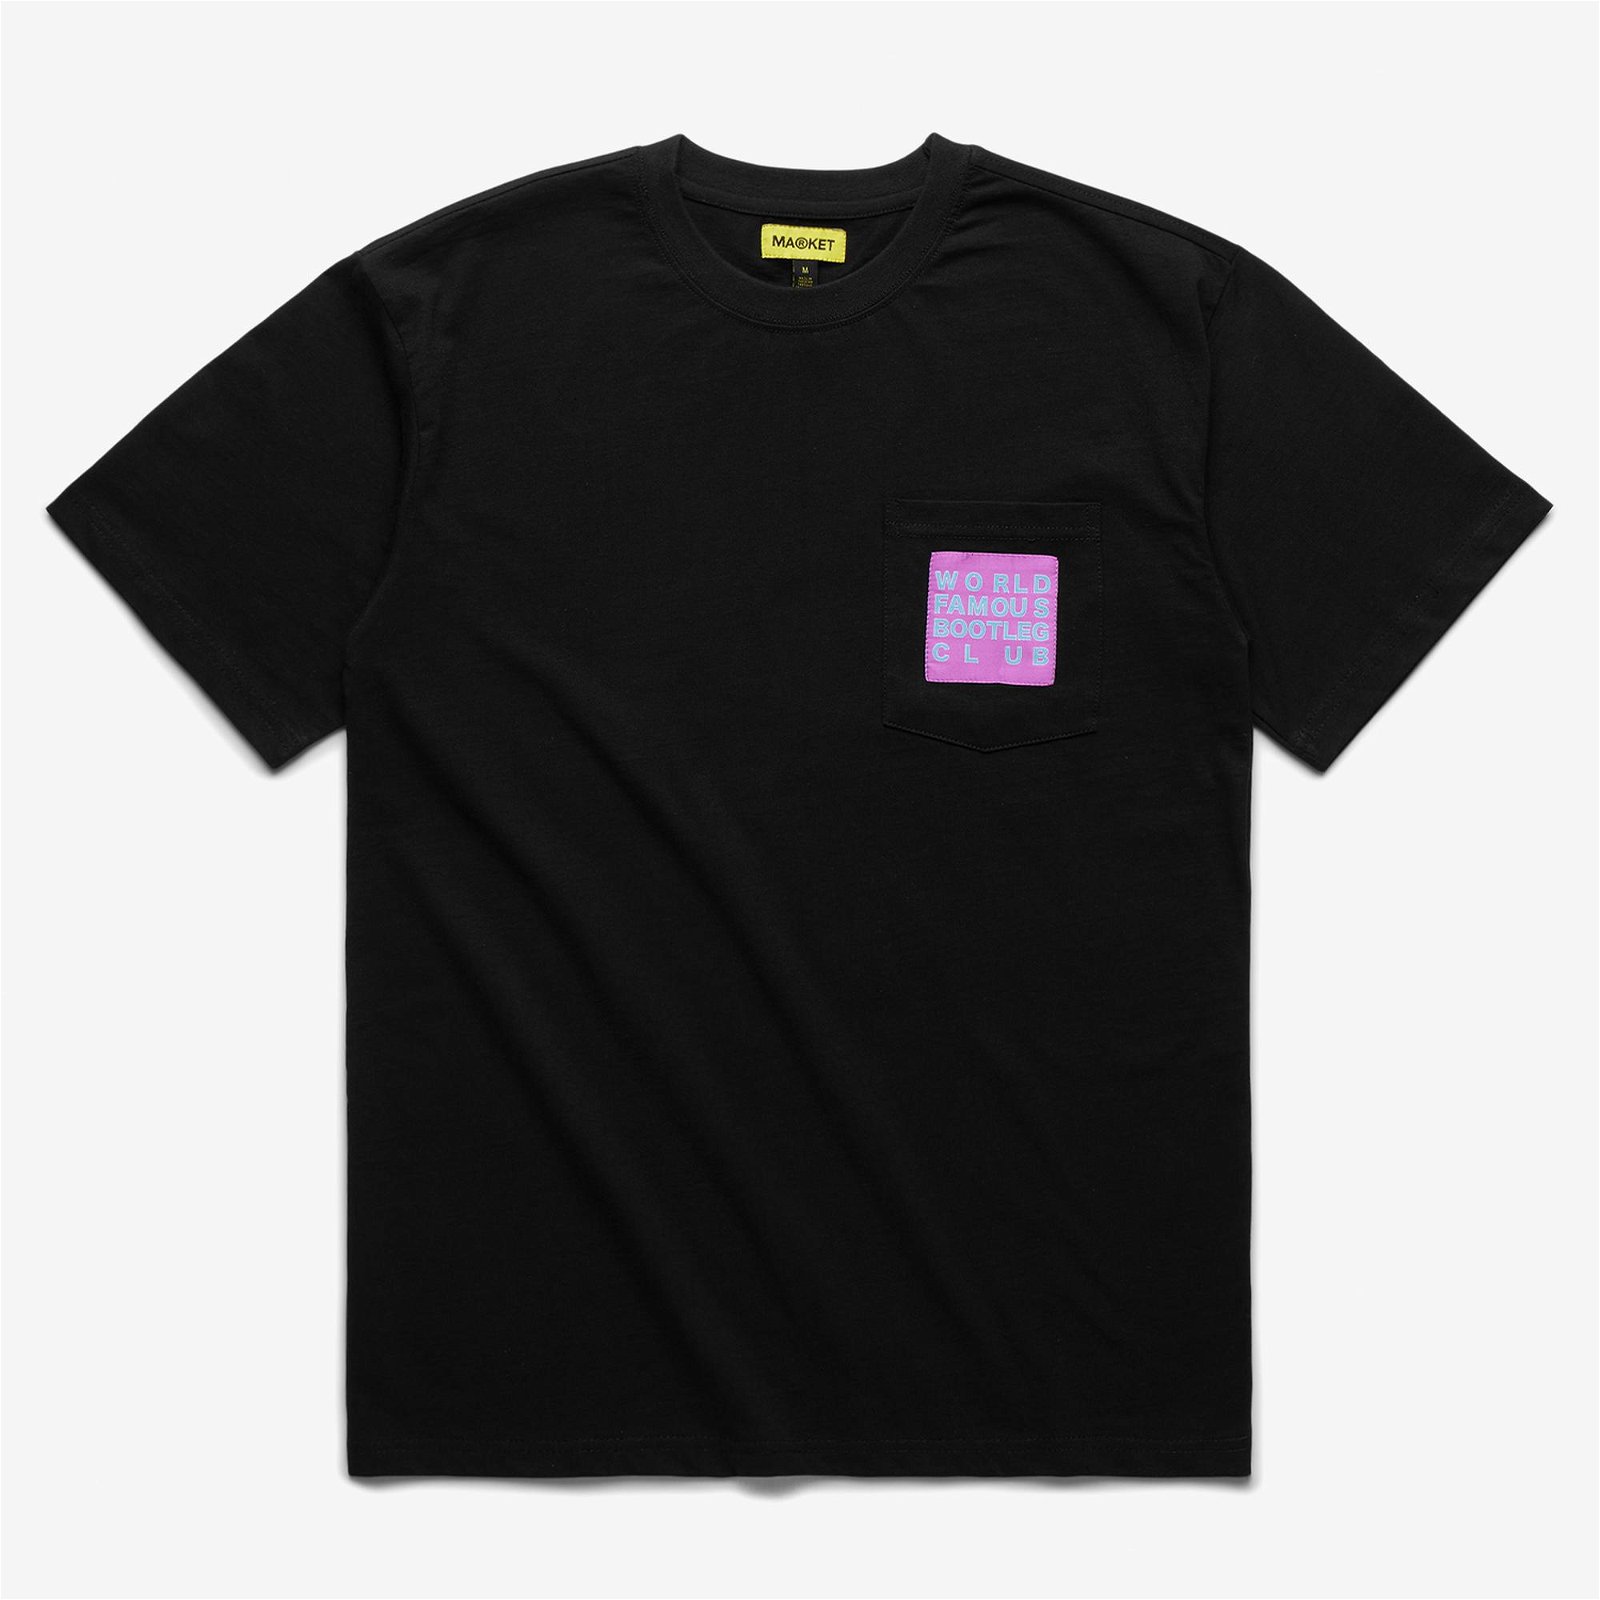 Market World Famous Bootleg Club Pocket Erkek Siyah T-Shirt